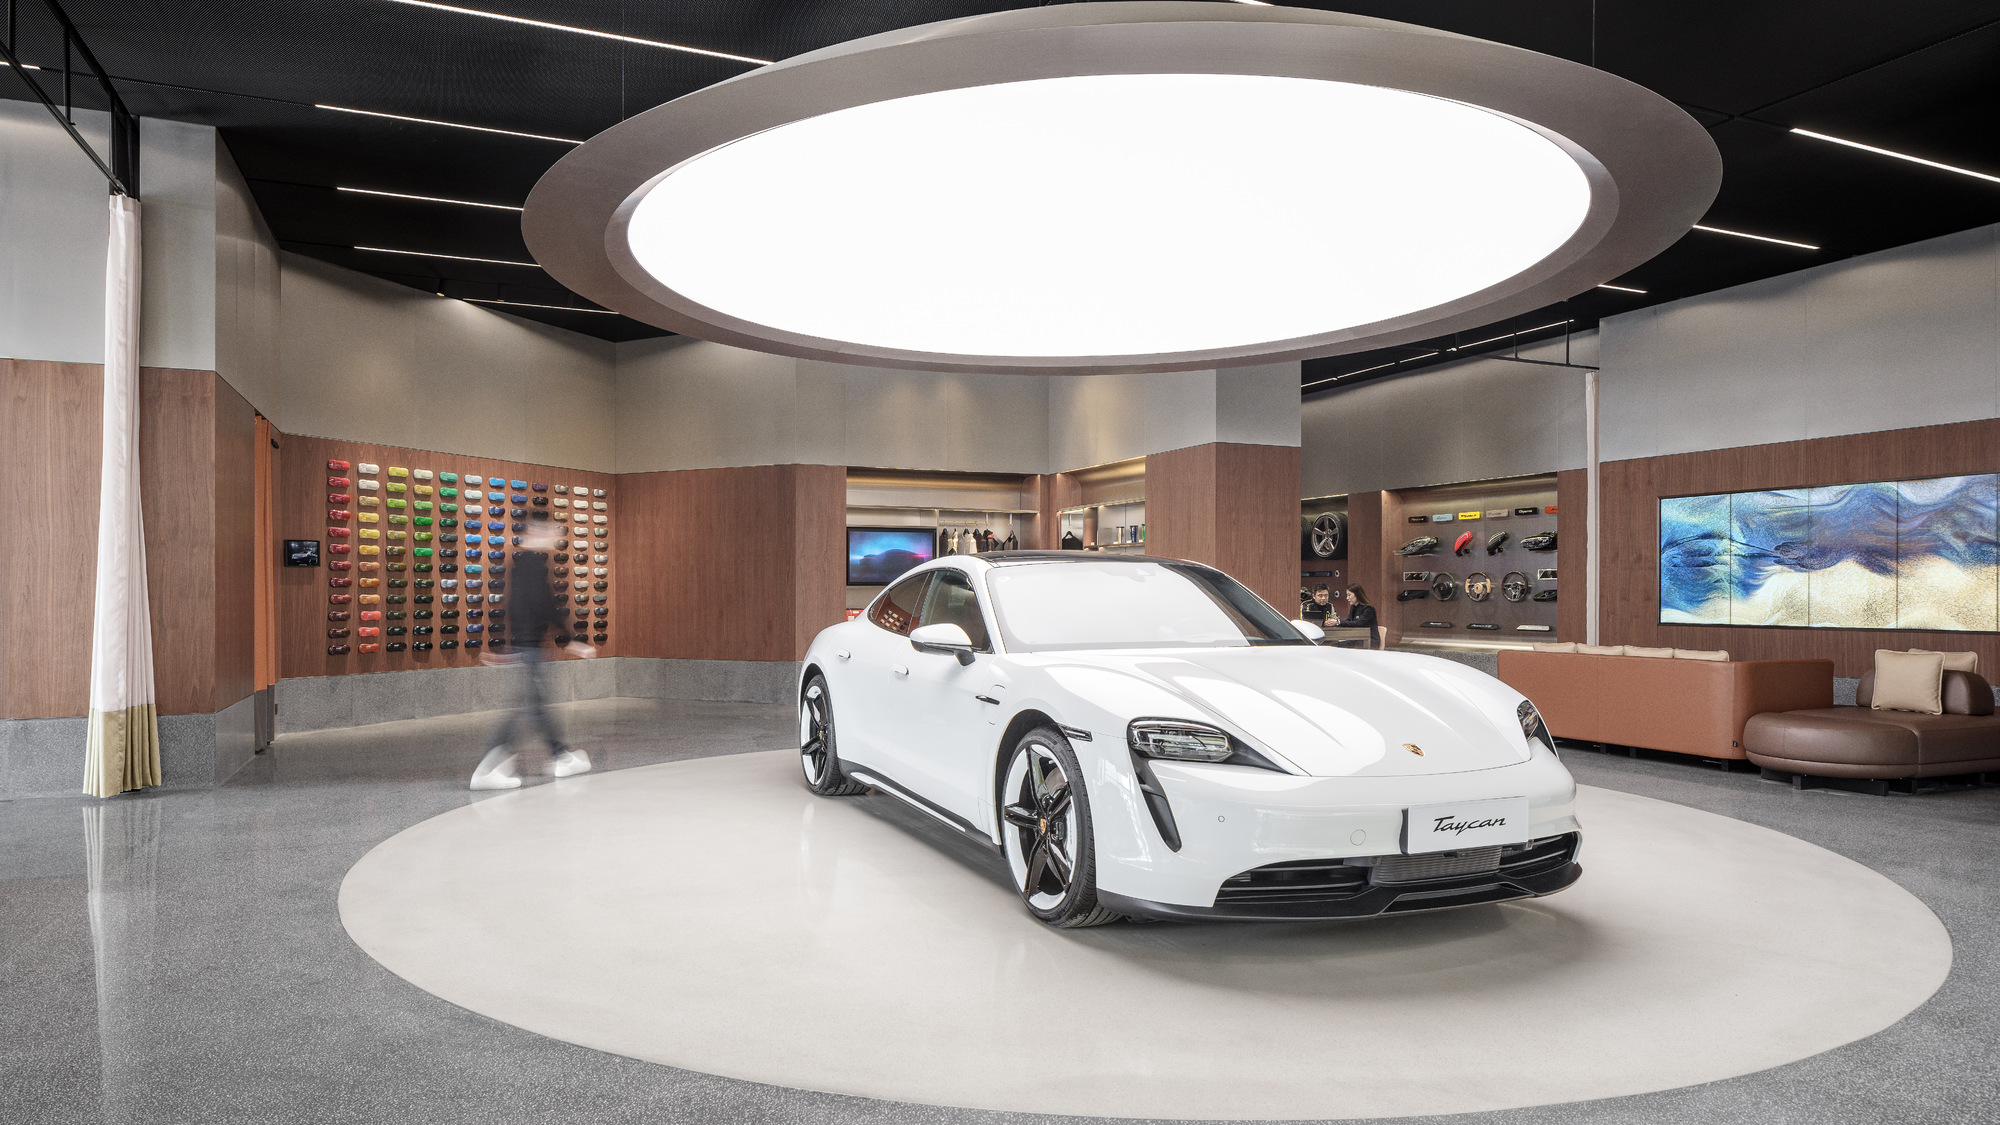 Porsche Retail Experience - UNStudio